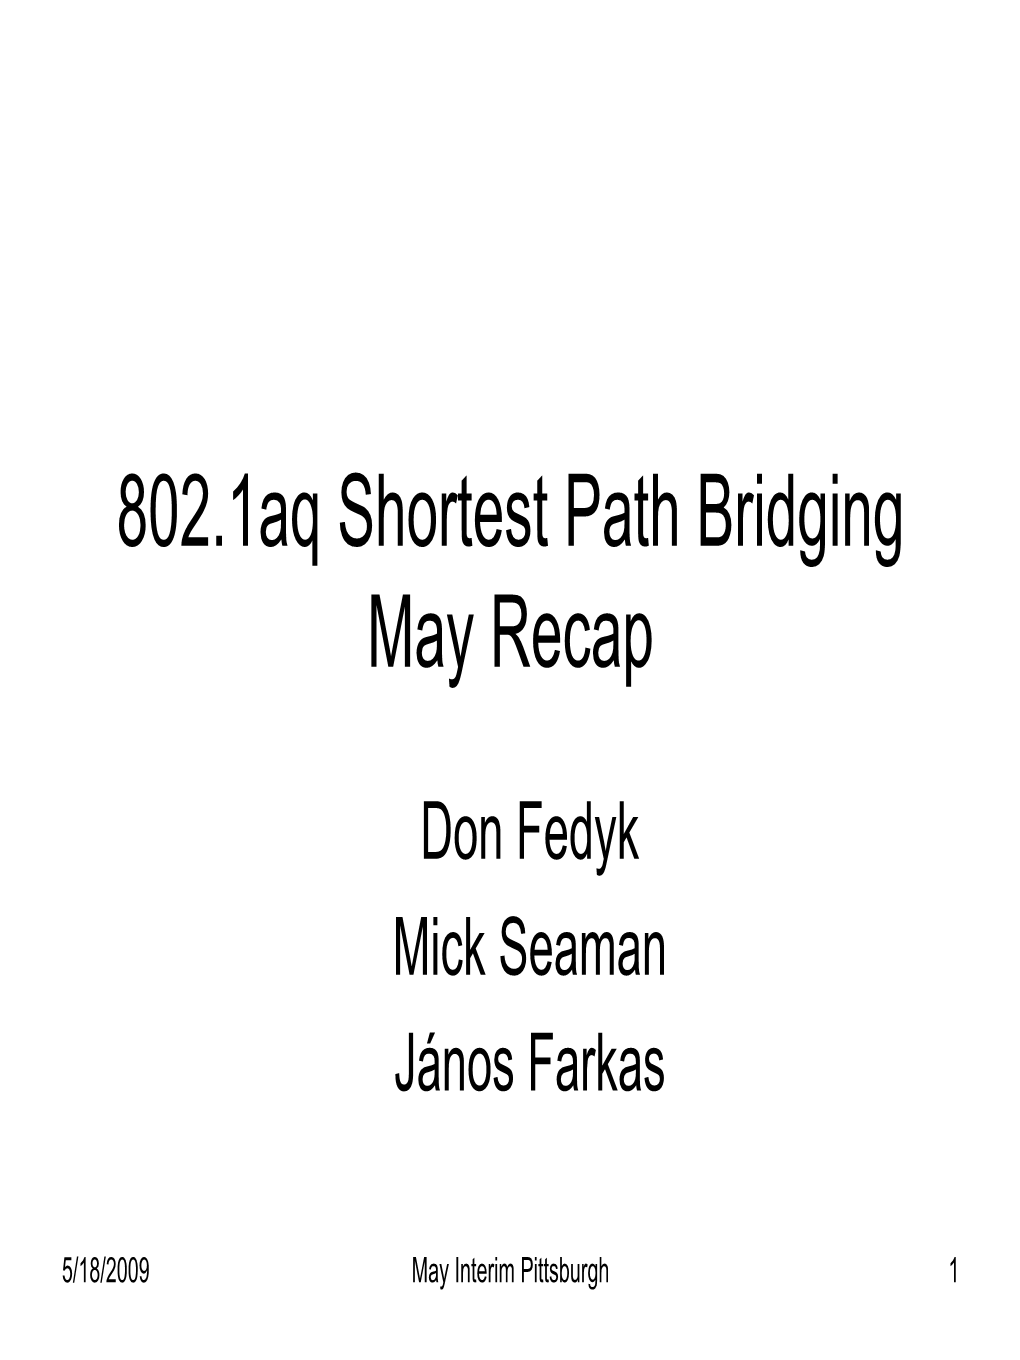 802.1Aq Shortest Path Bridging May Recap